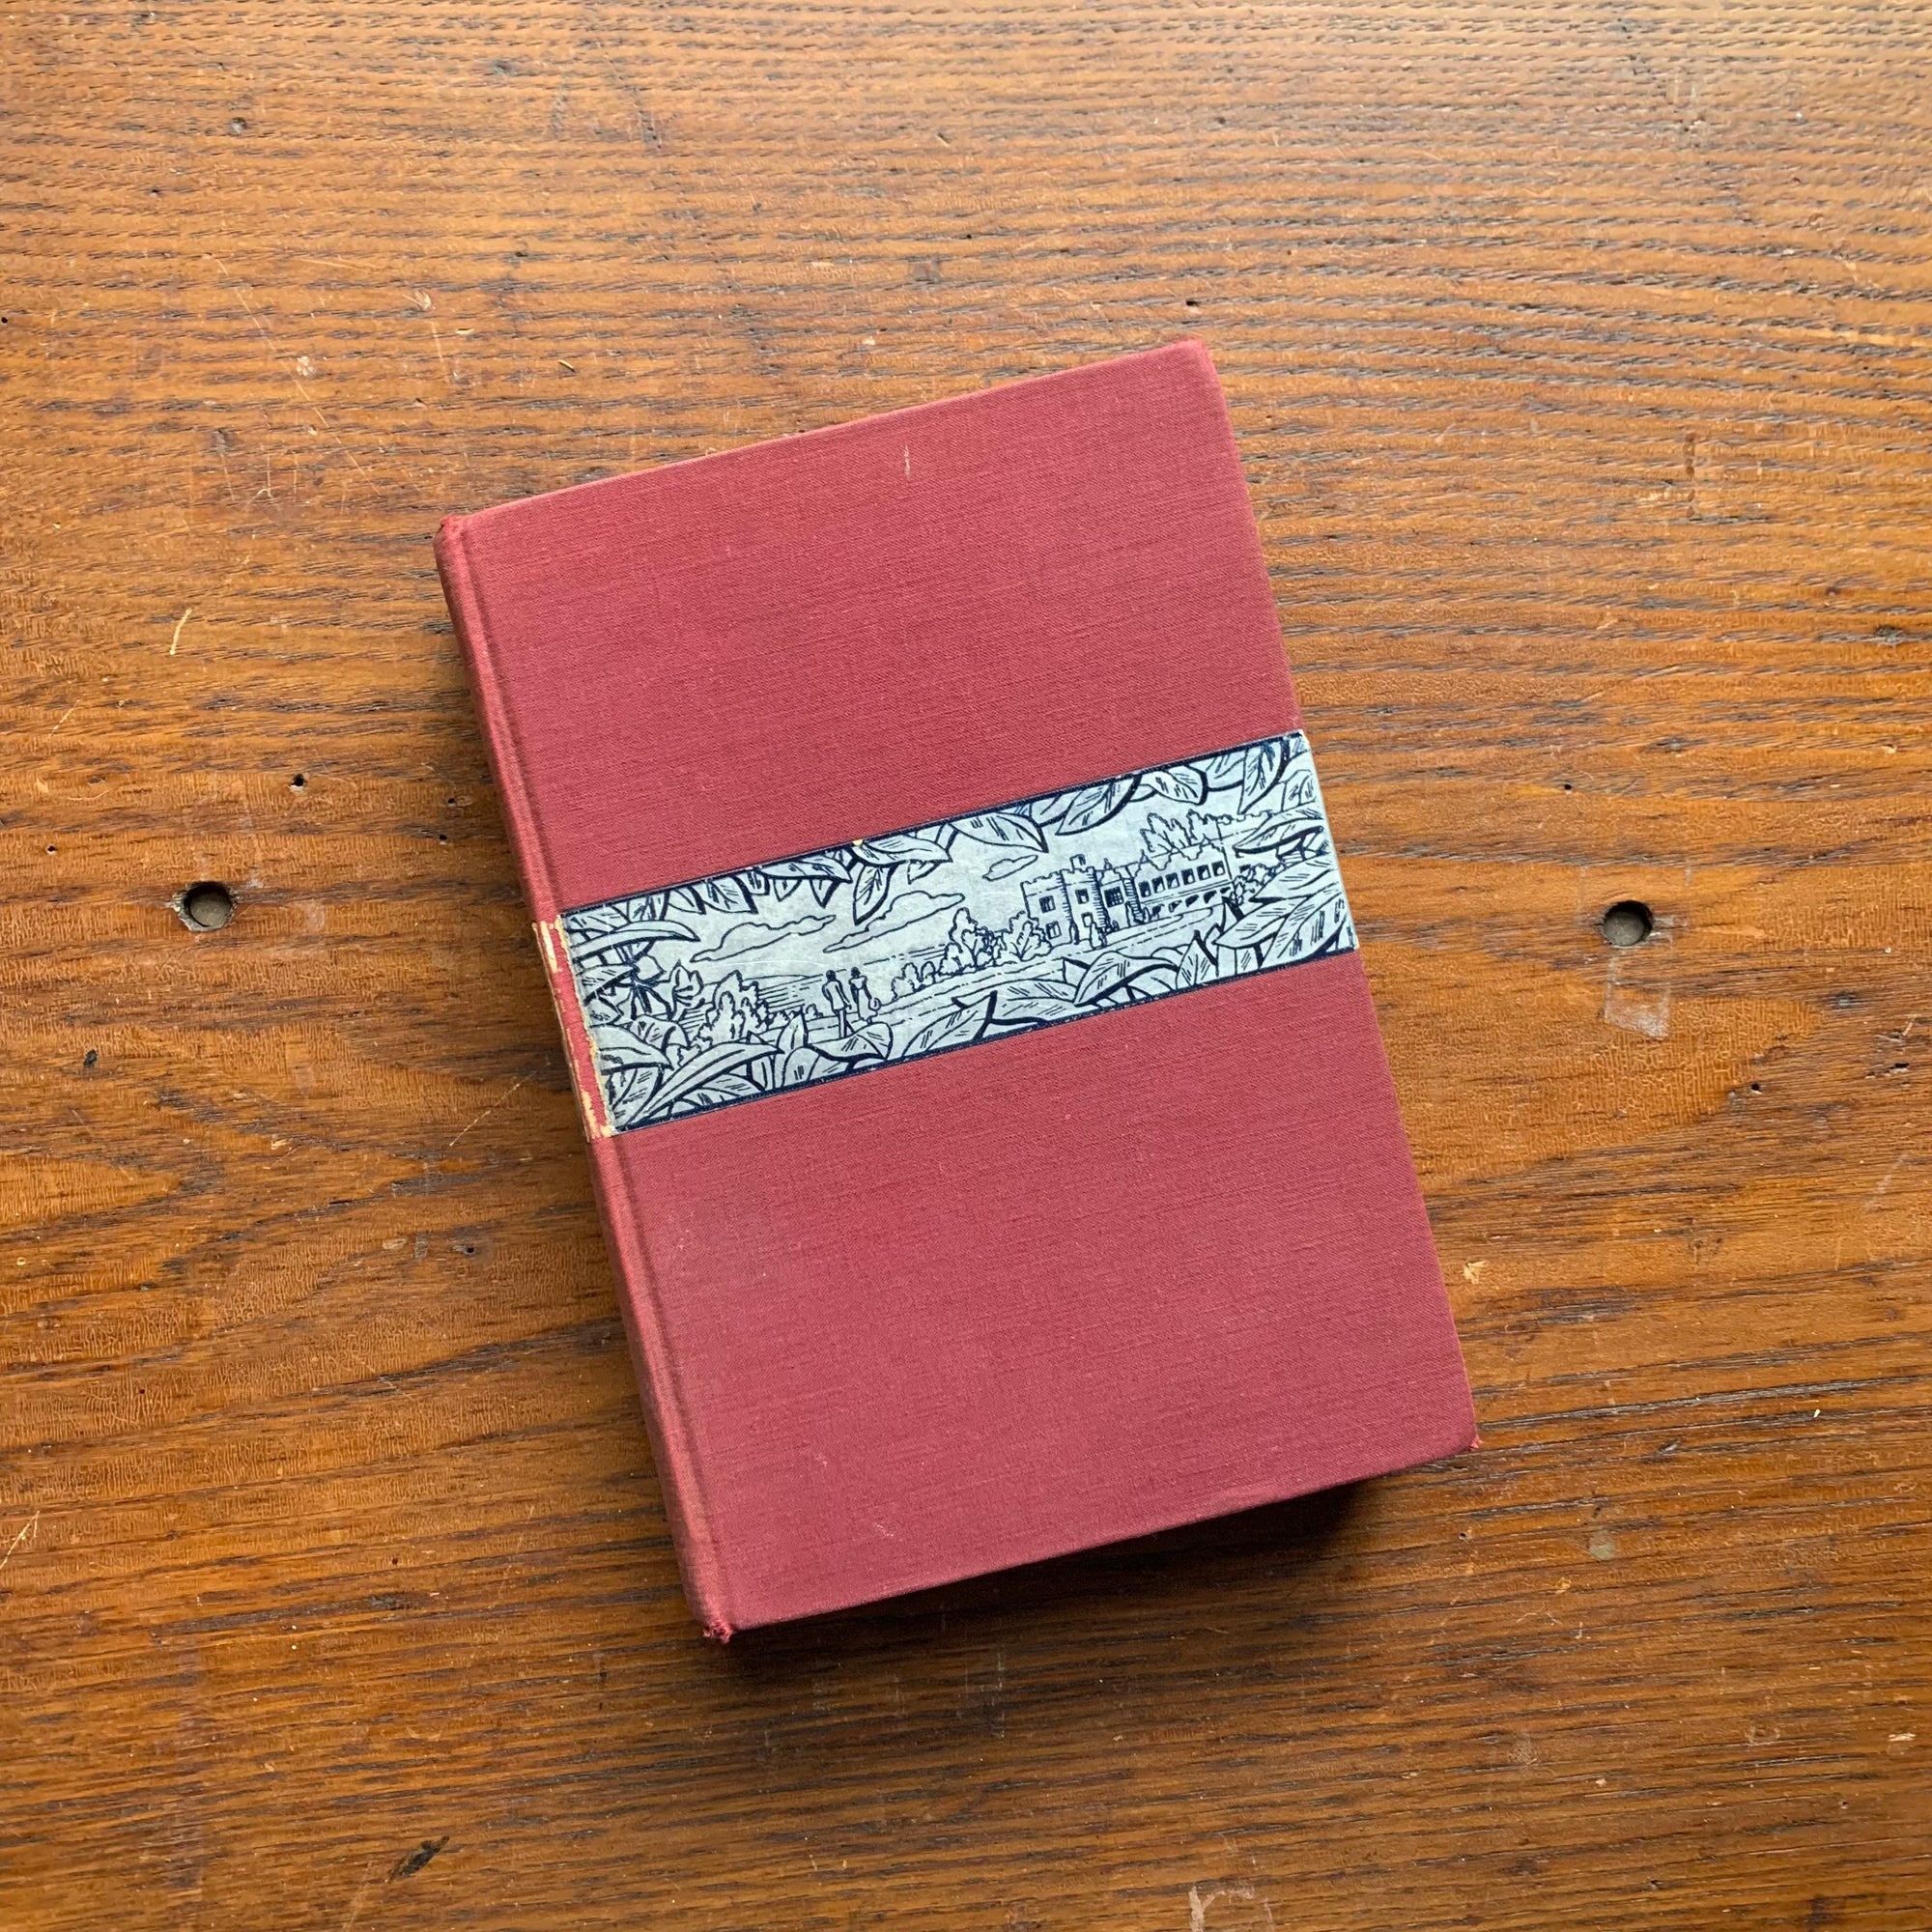 Rebecca by Daphne du Maurier - 1938 First American Edition - Doubleday Doran